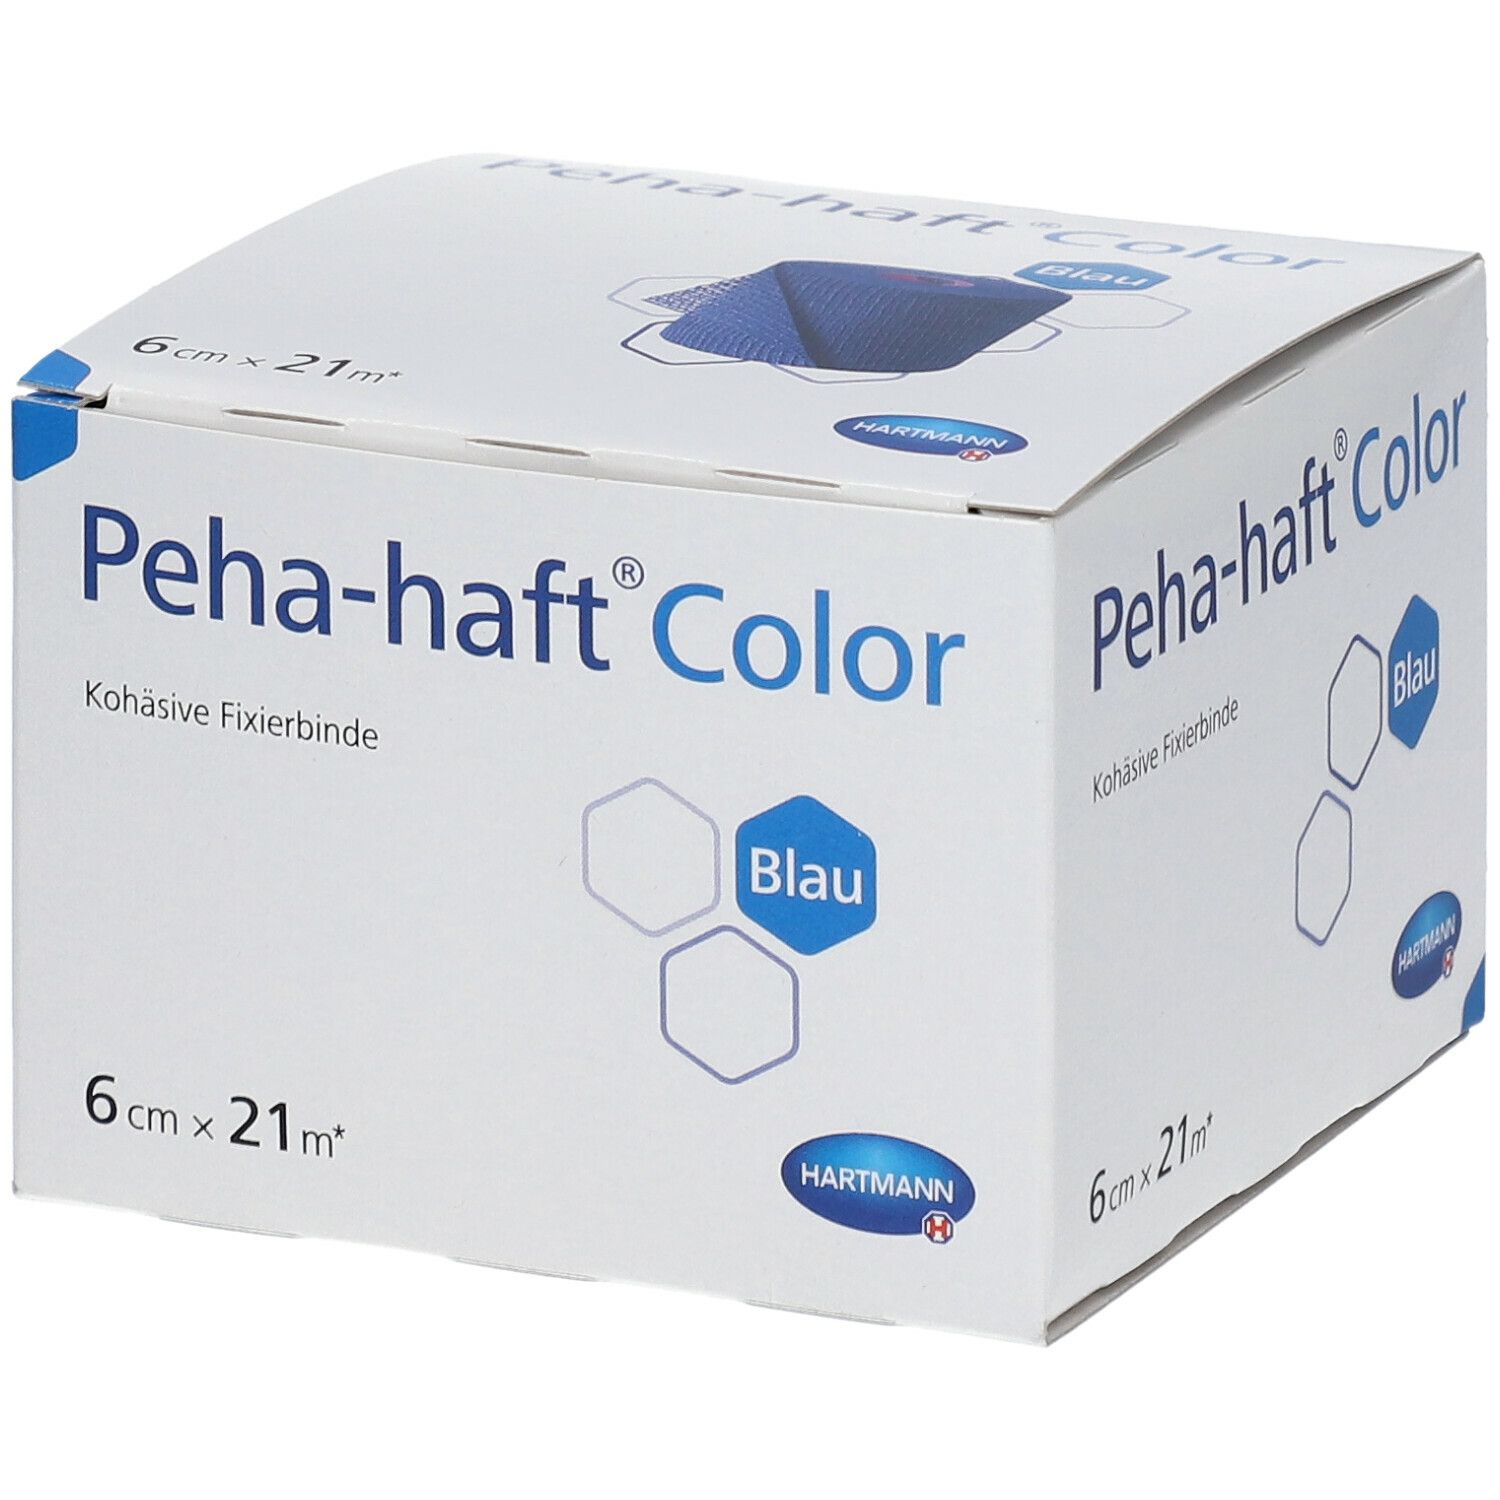 Peha-haft® Color latexfrei Fixierbinde blau 6 cm x 21 m blau